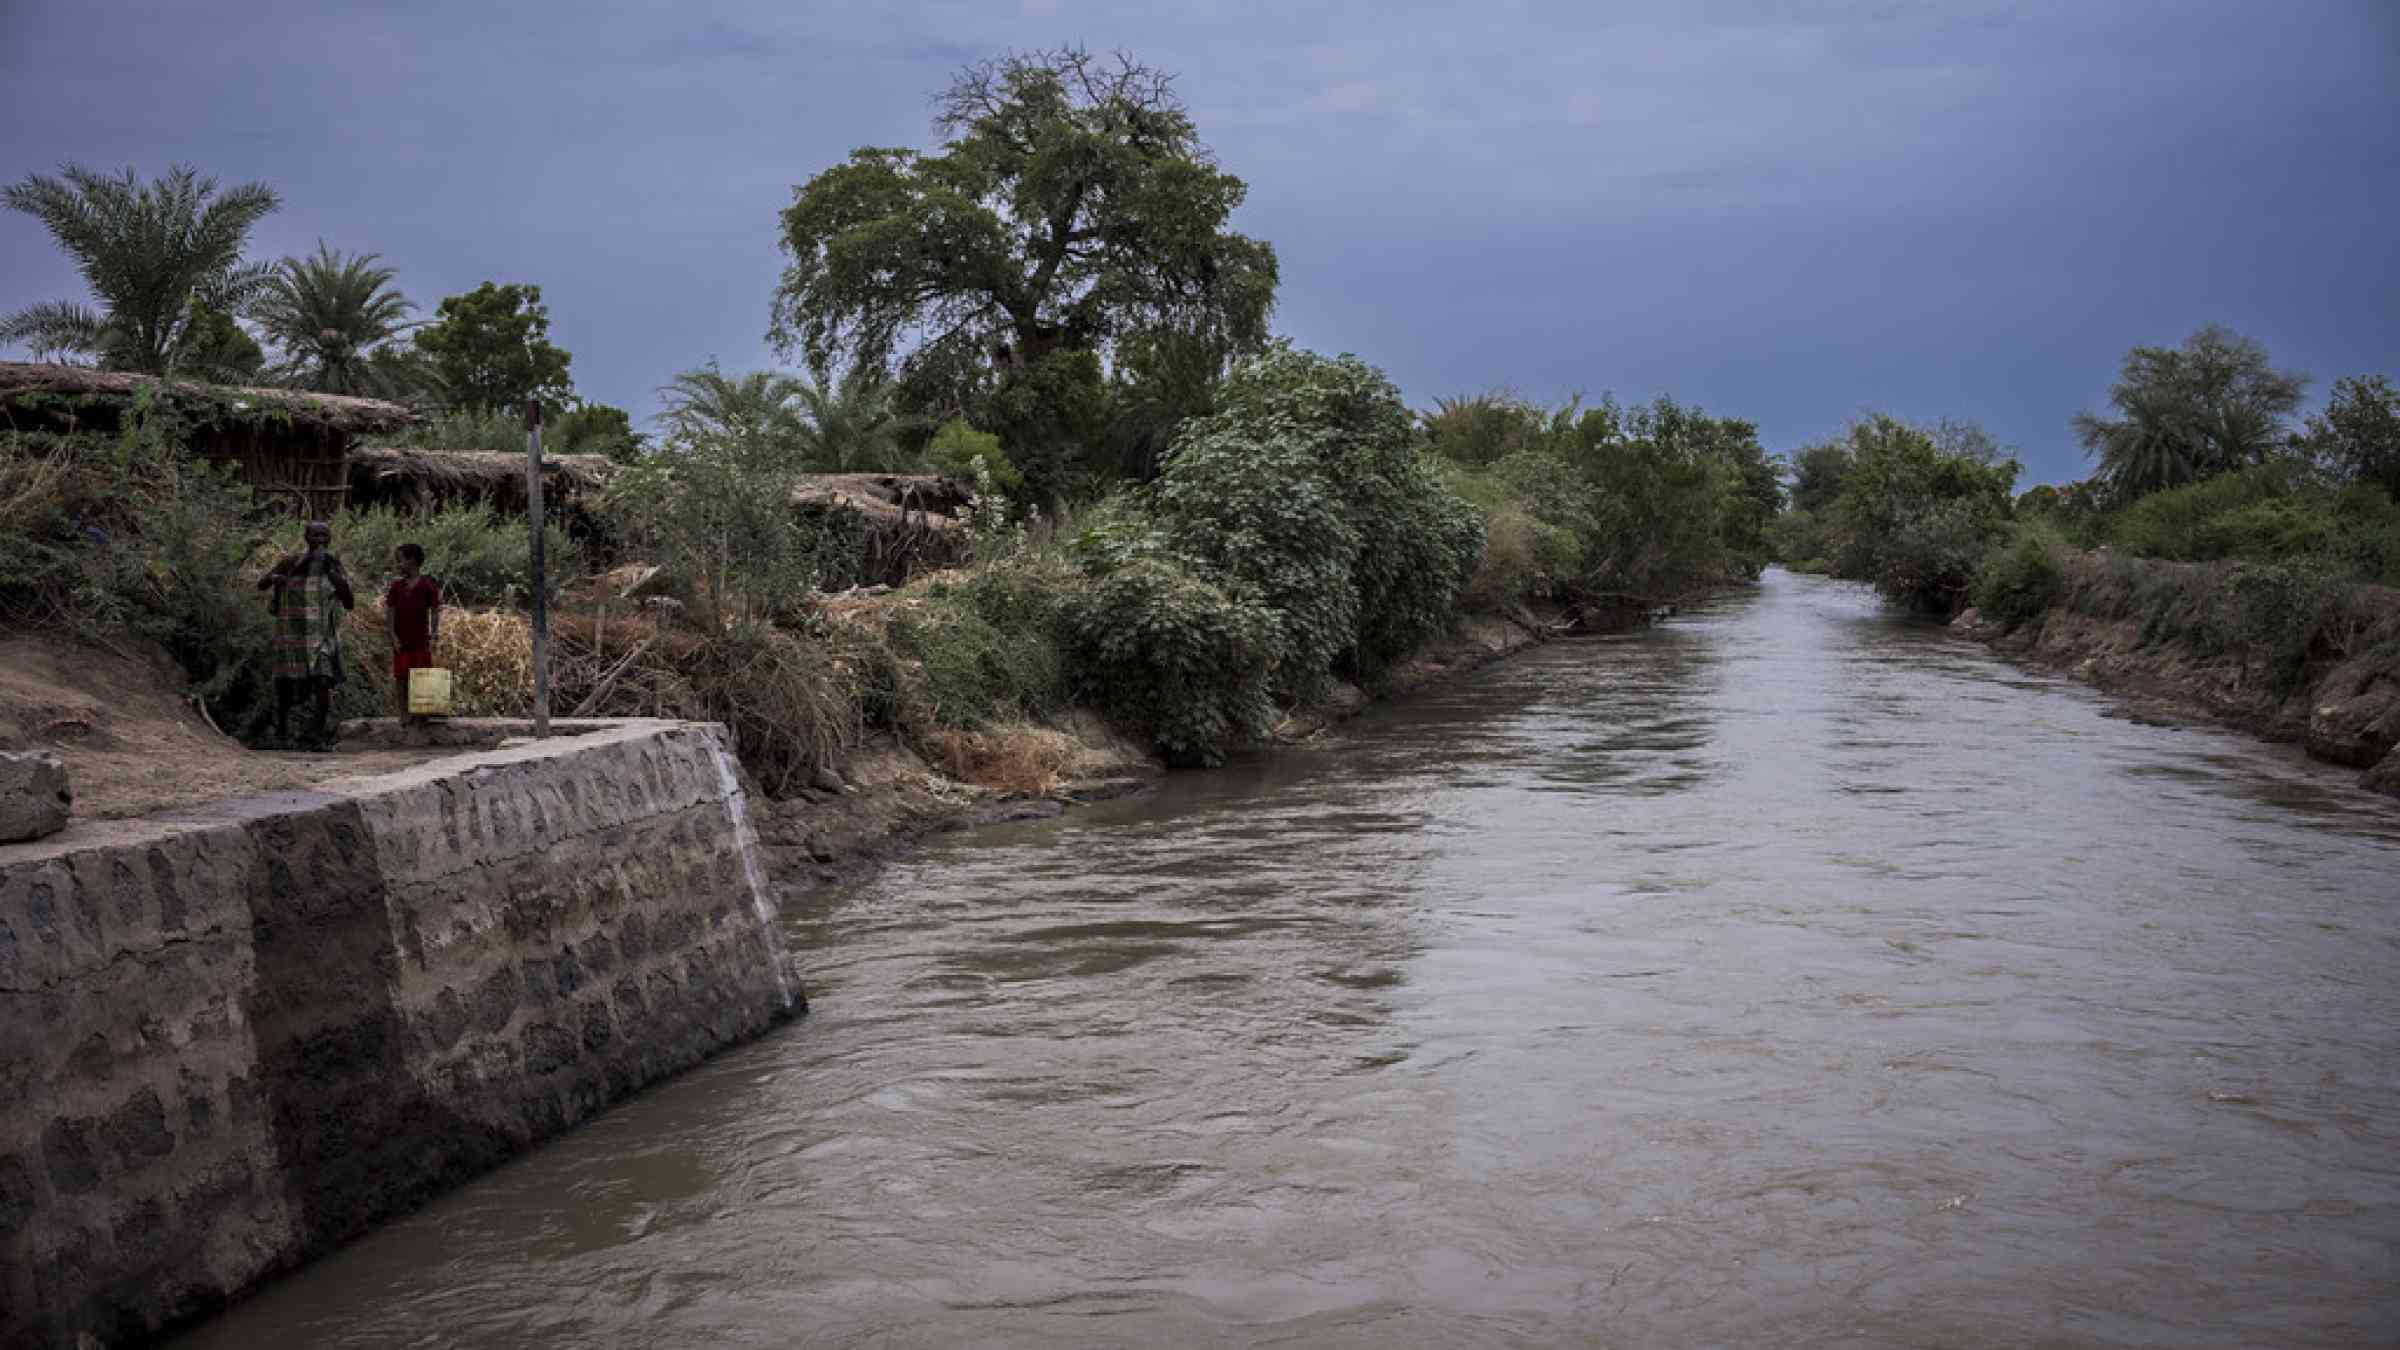 A swollen river in Asayita, Ethiopia due to heavy rainfall